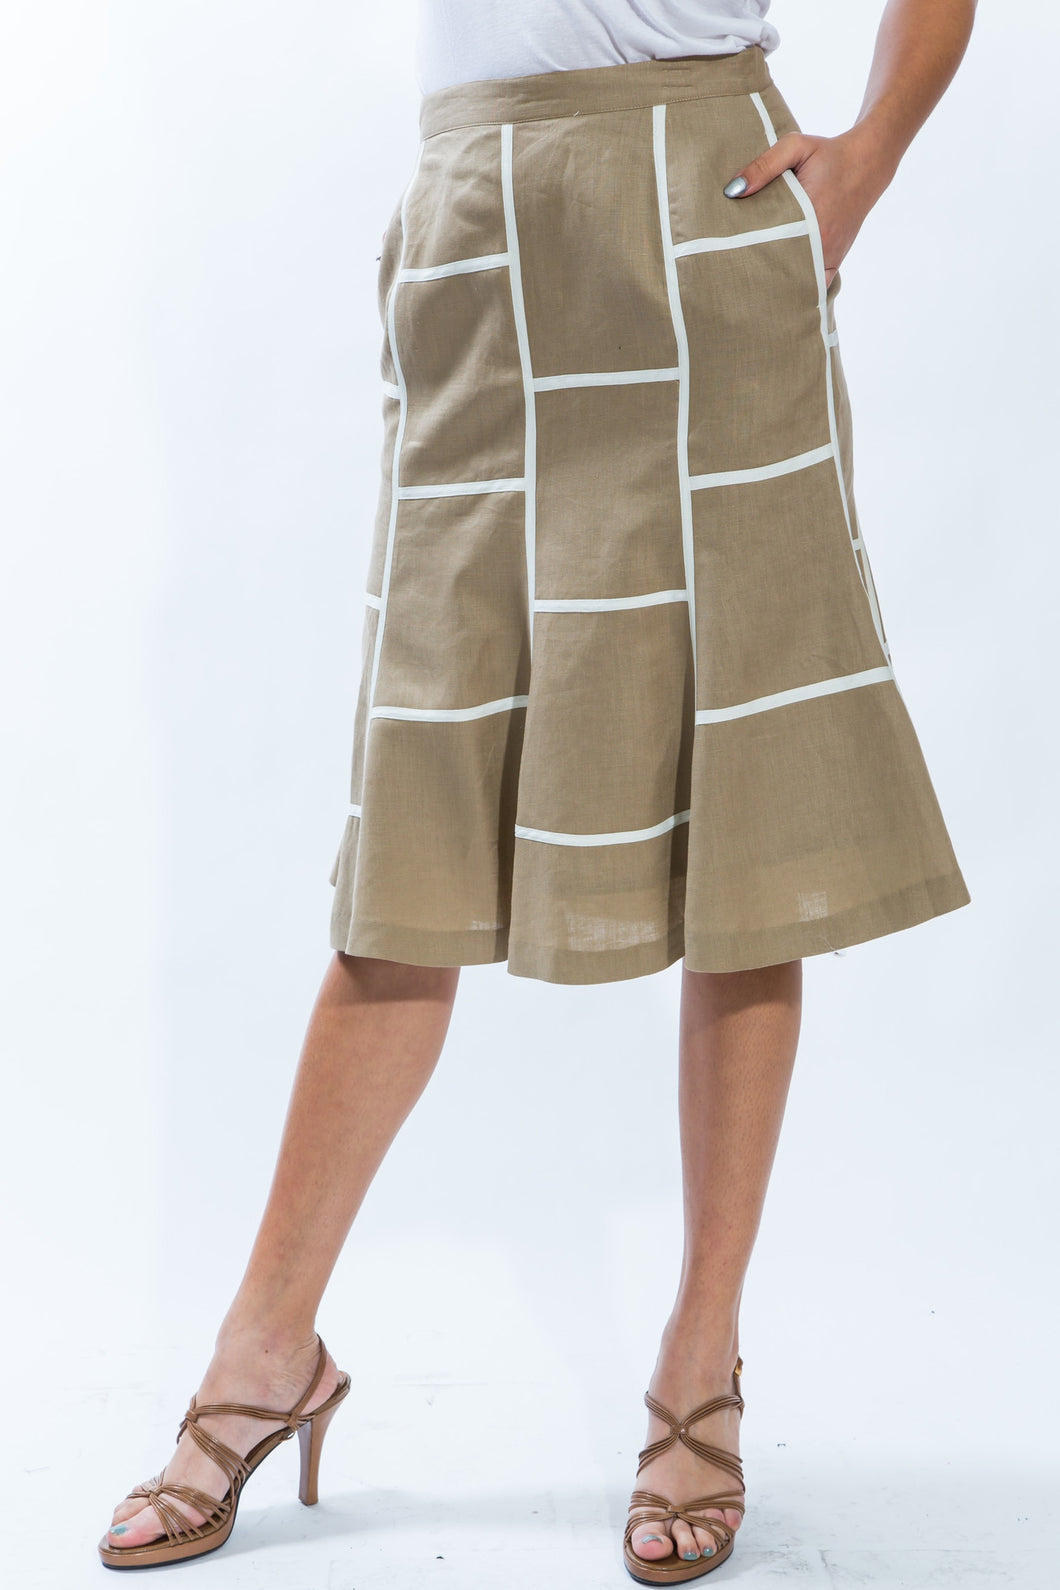 Geometric Flare Skirt 100% Linen - Style 1724  (Khaki)